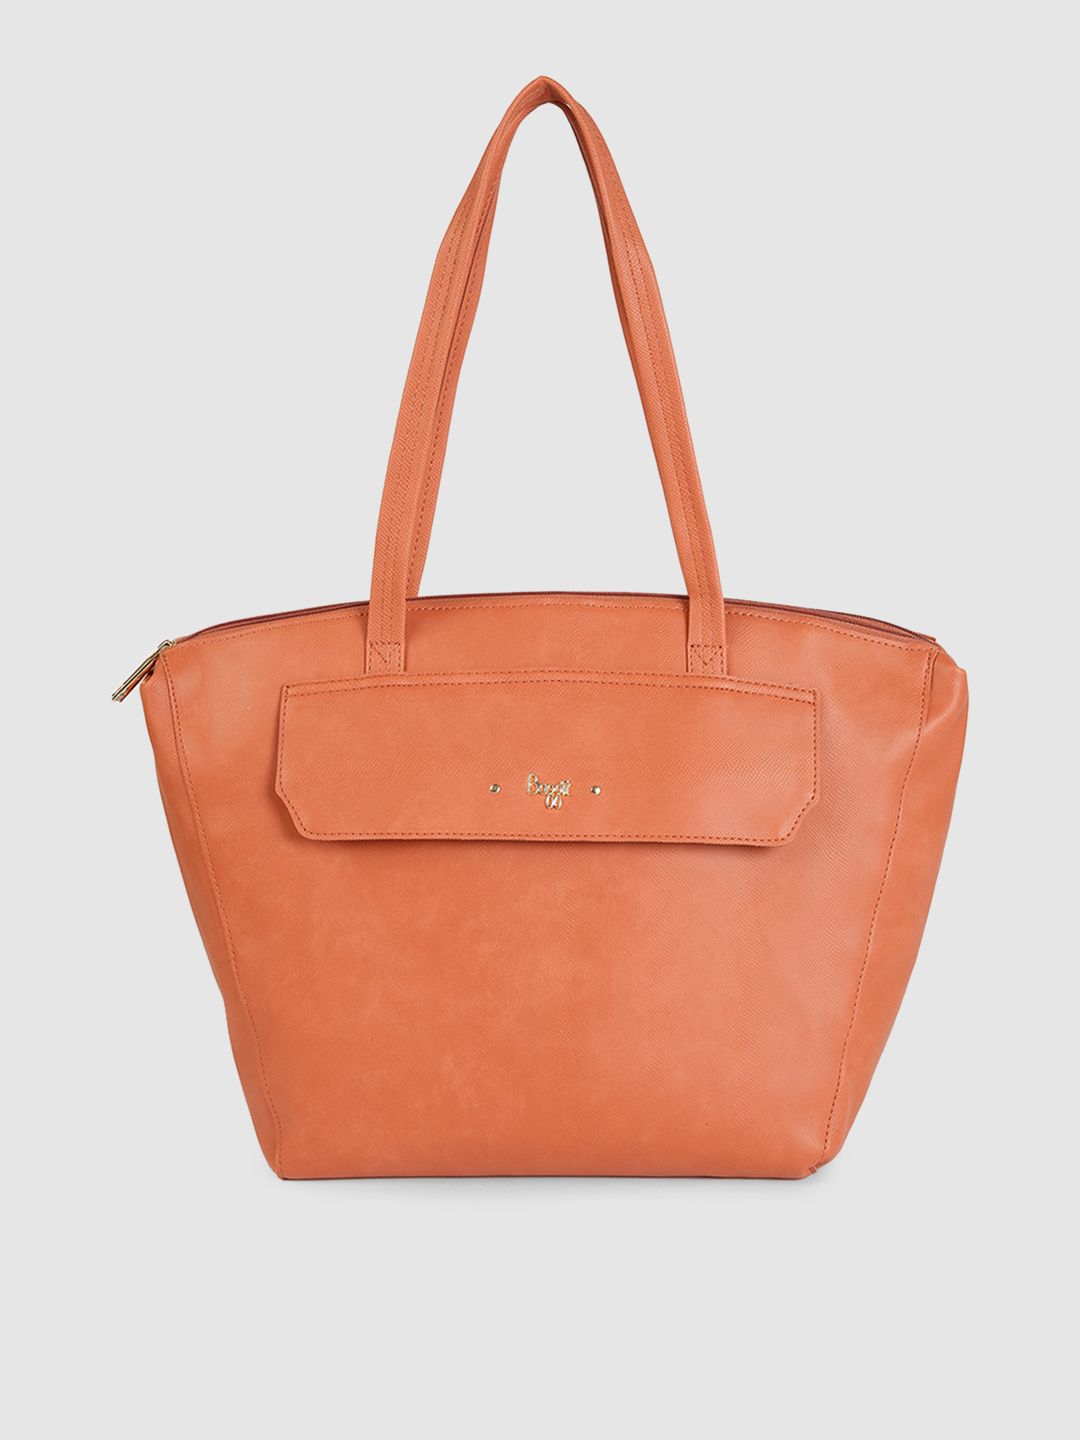 Baggit Coral Orange Structured Shoulder Bag Price in India